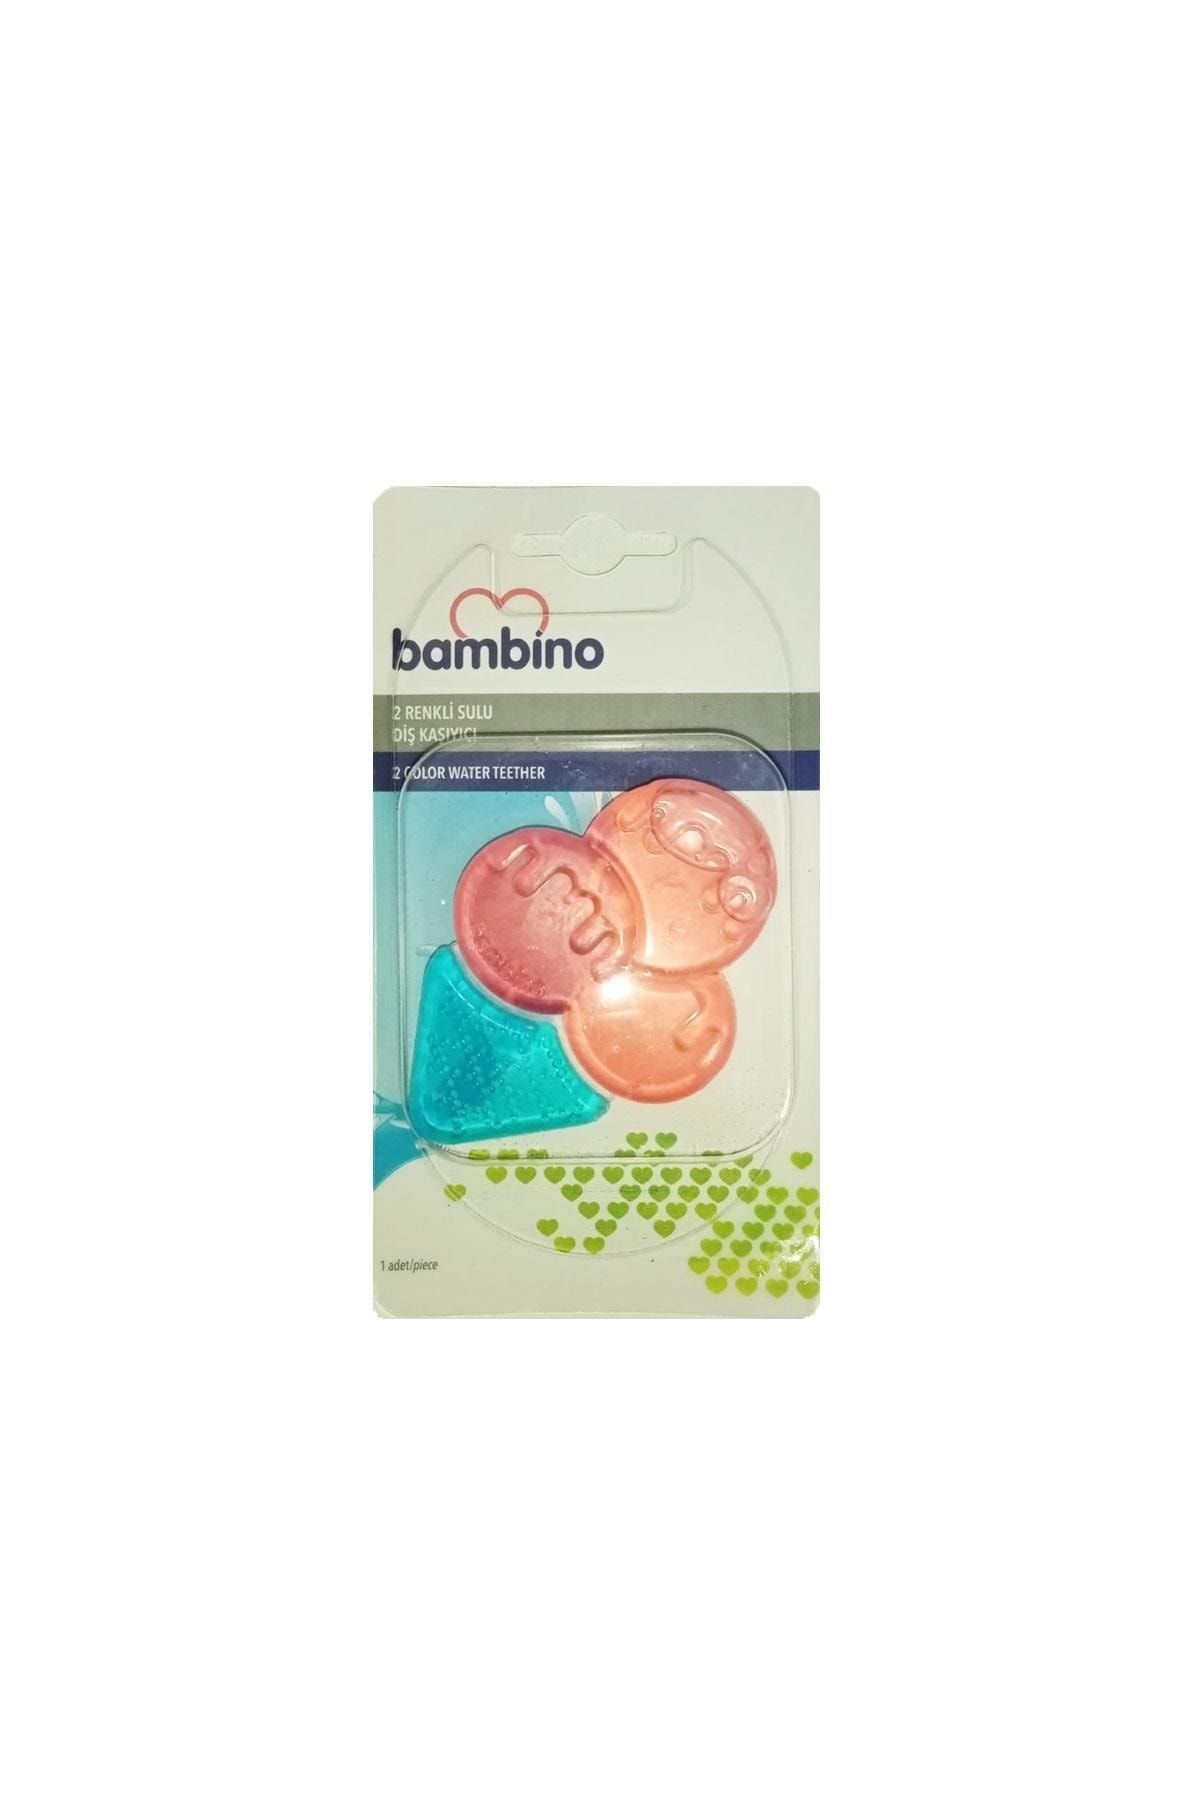 Bambino 2 Renkli Sulu Diş Kaşıyıcı P0656